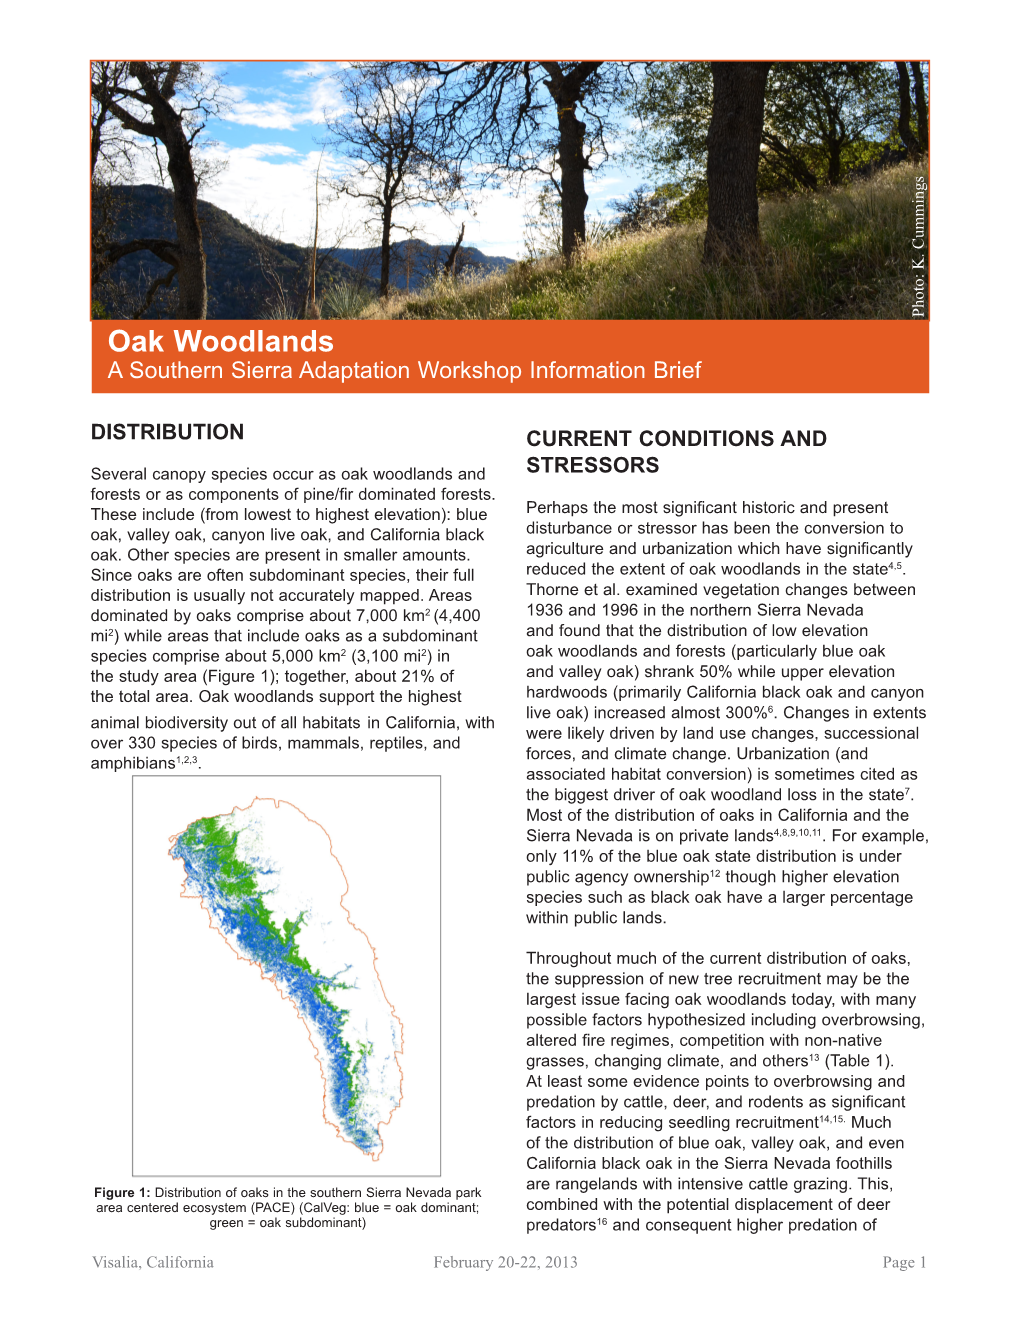 Oak Woodlands a Southern Sierra Adaptation Workshop Information Brief